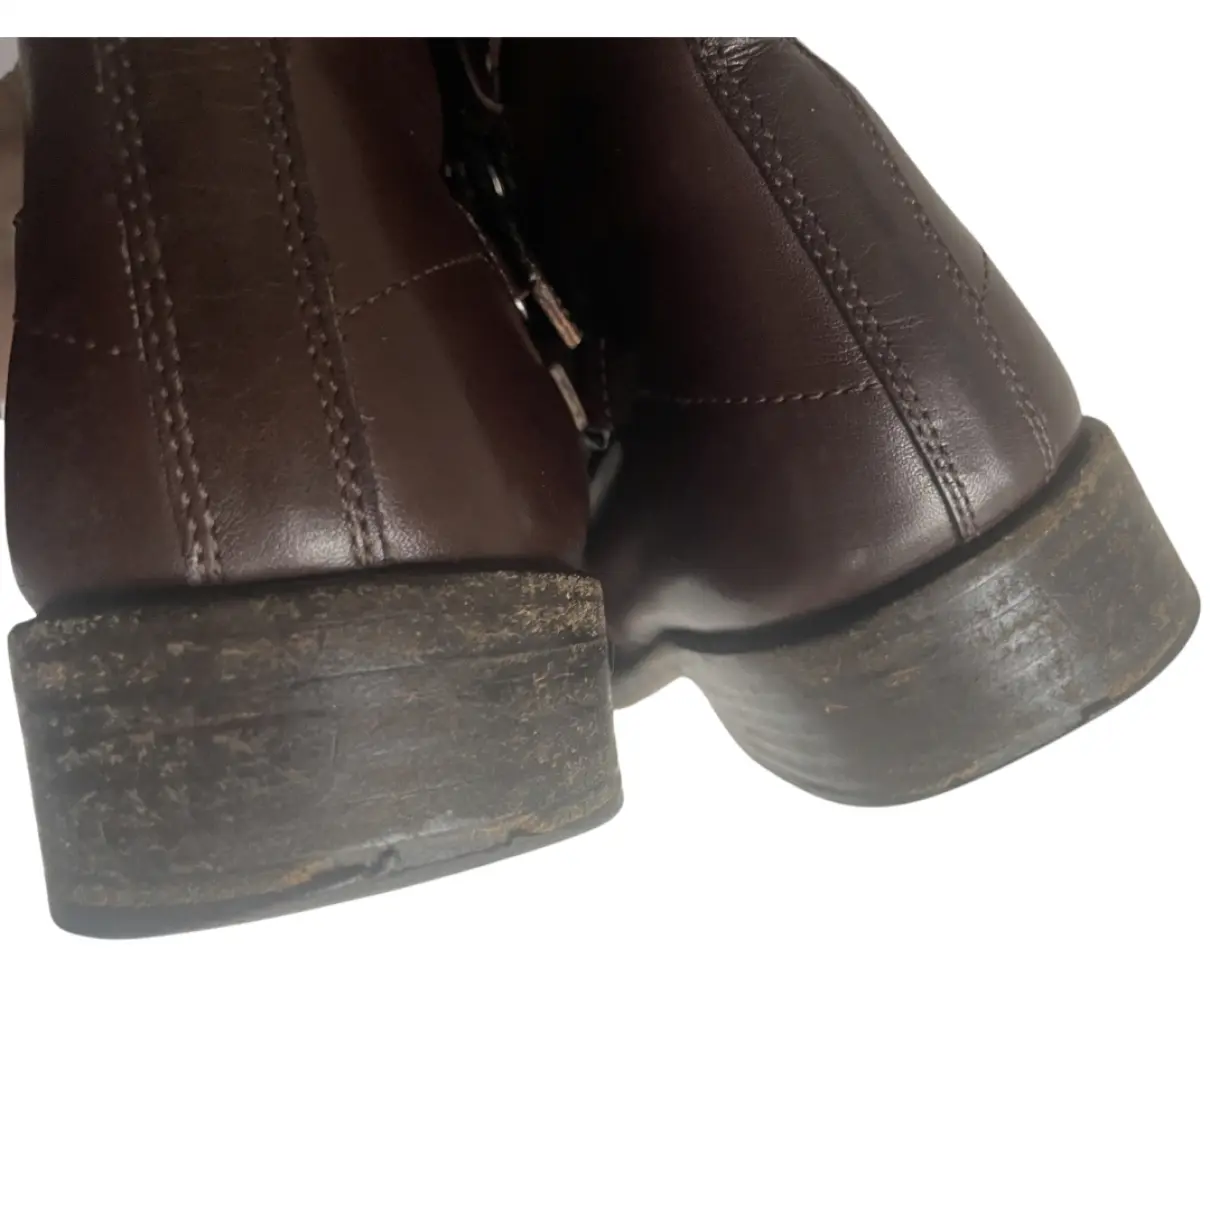 Leather riding boots Prada